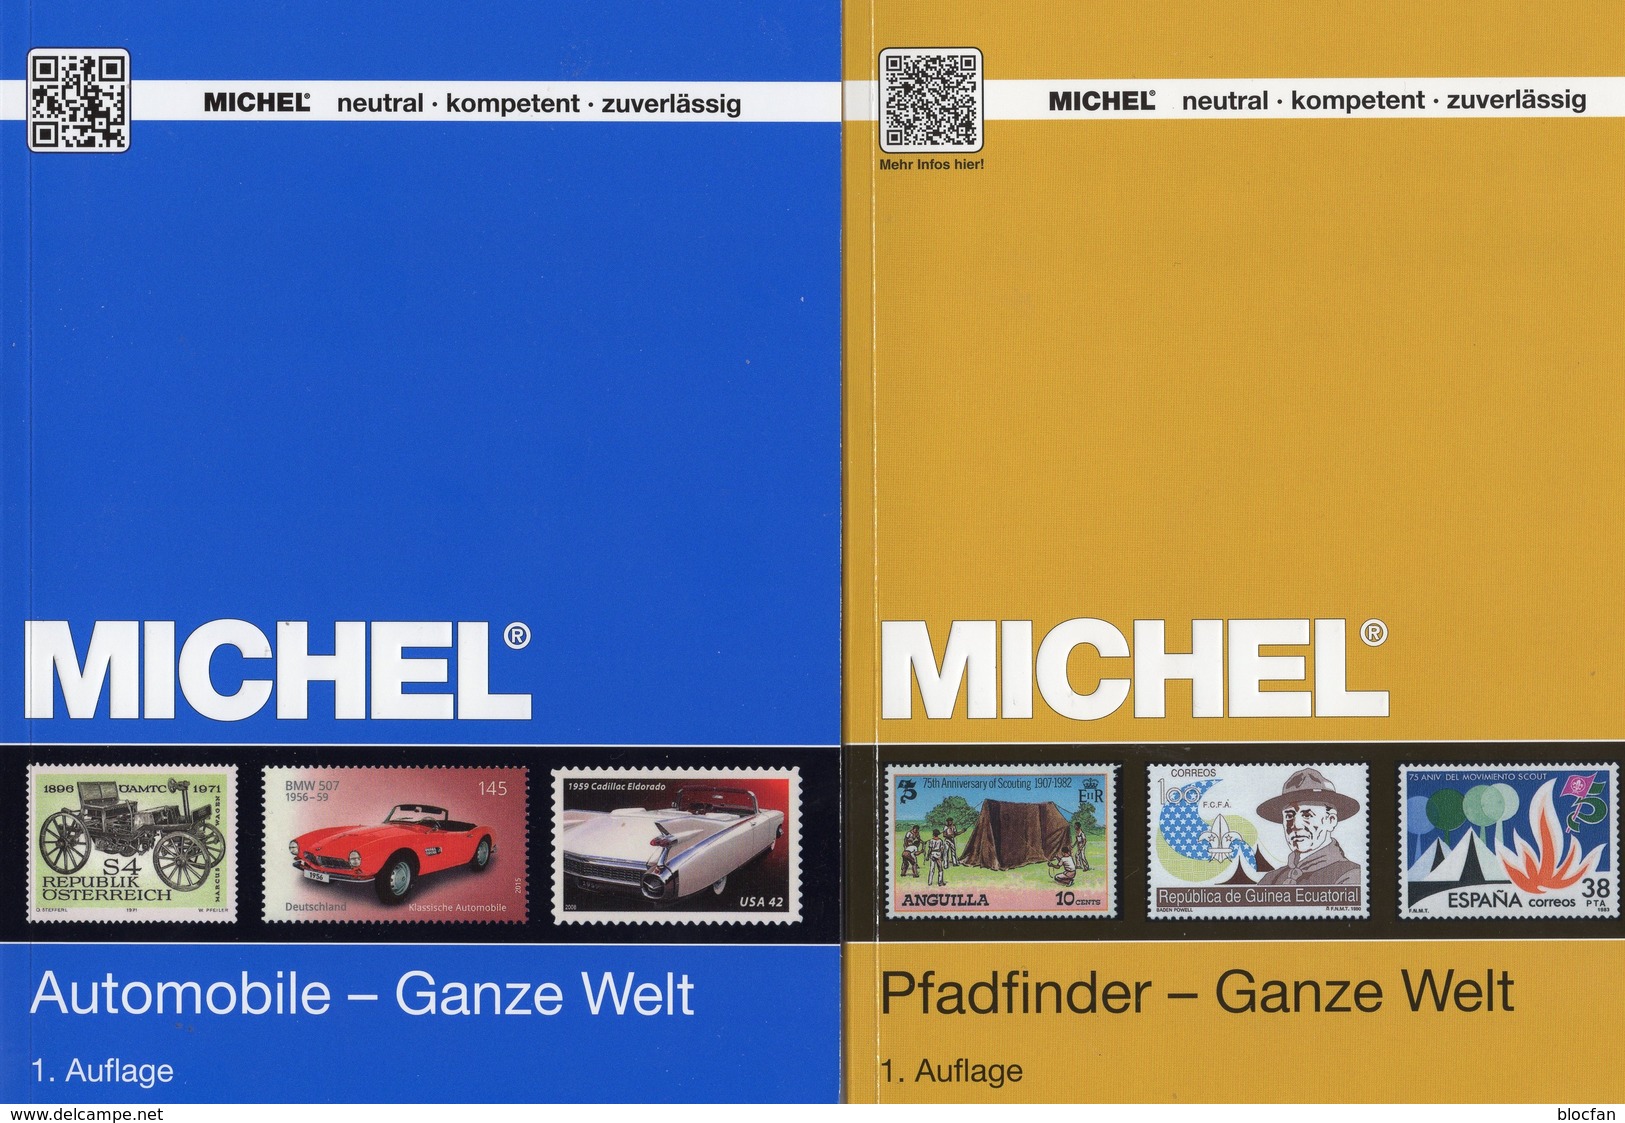 Motiv-Katalog MlCHEL Pfadfinder/Automobile 2015/2018 Neu 134€ Autos Scout/car Stamps Catalogue Topics Of The Worlds - Original Editions